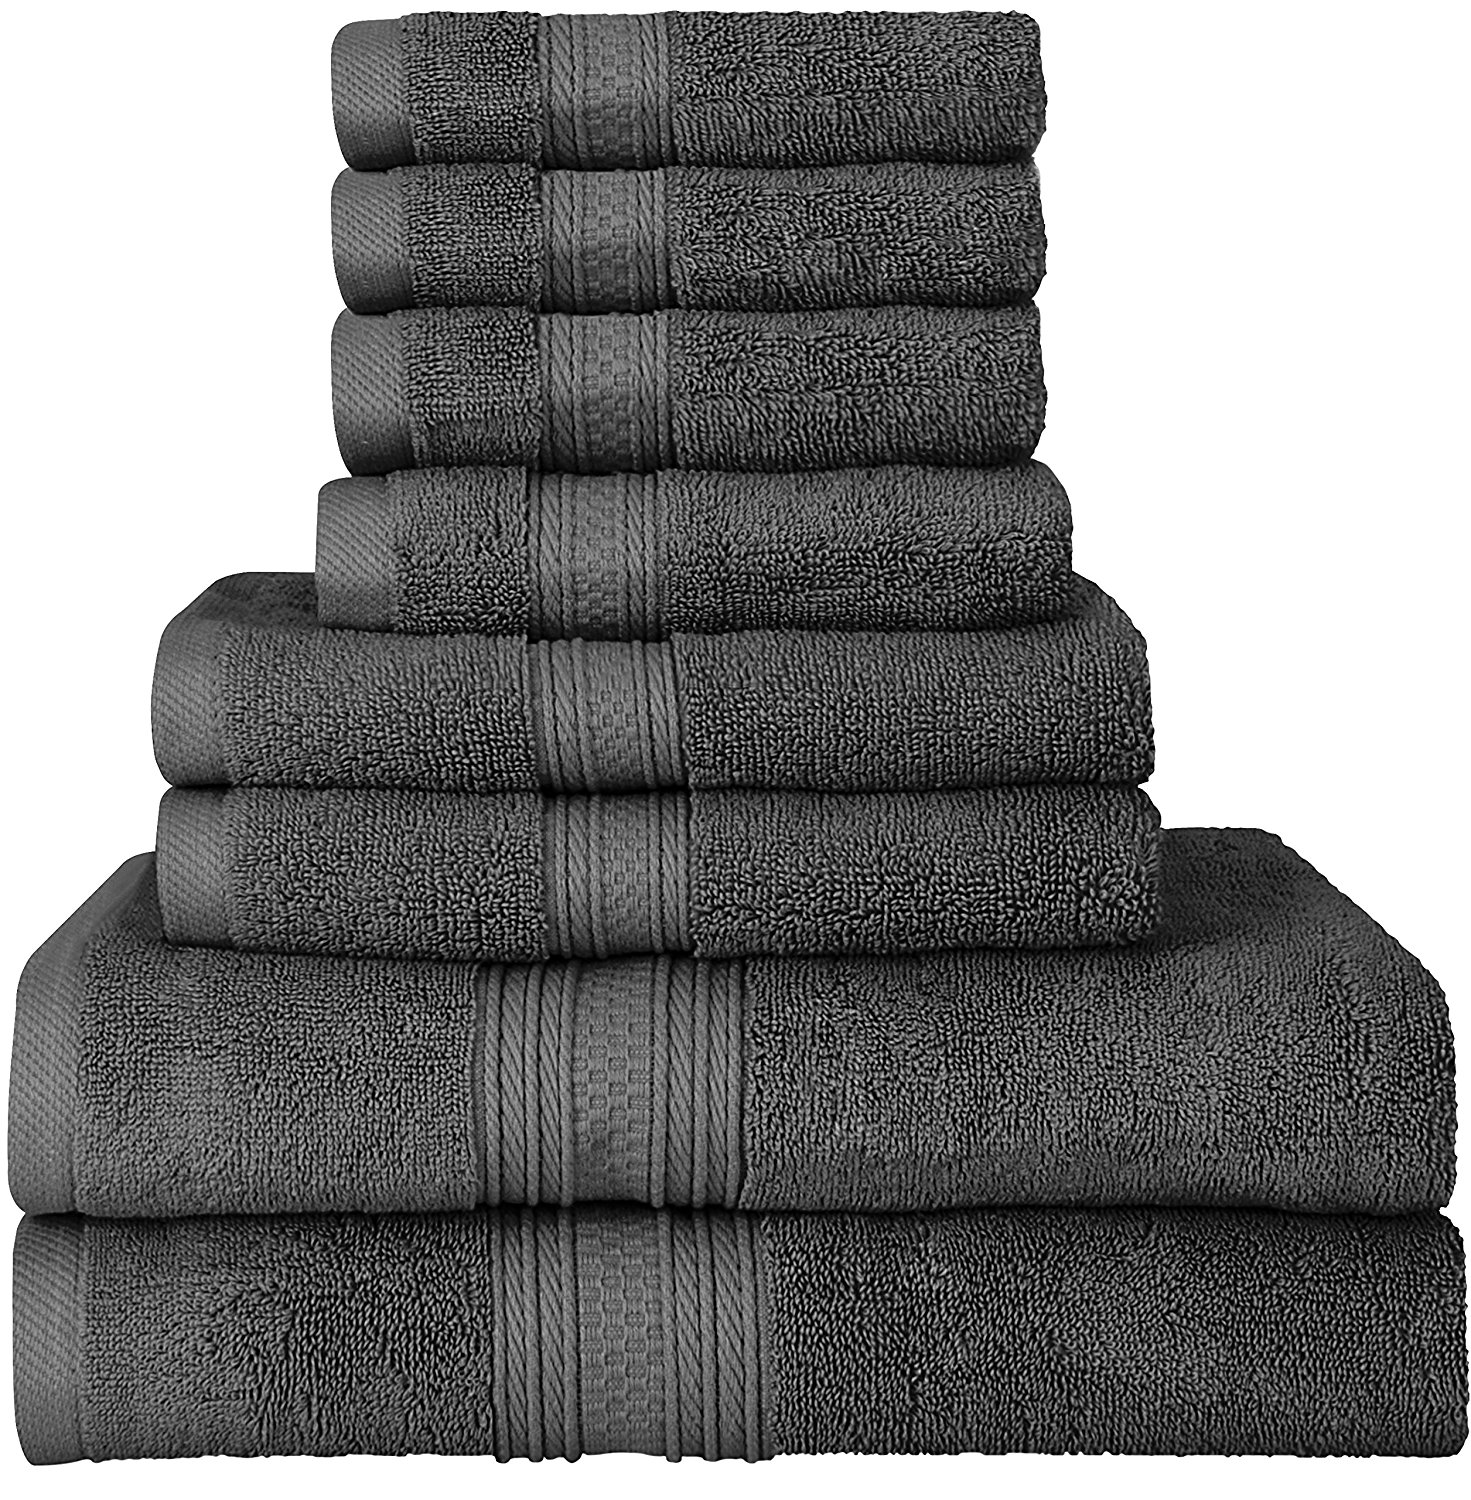 Premium 700 GSM 8-piece towel set for $24